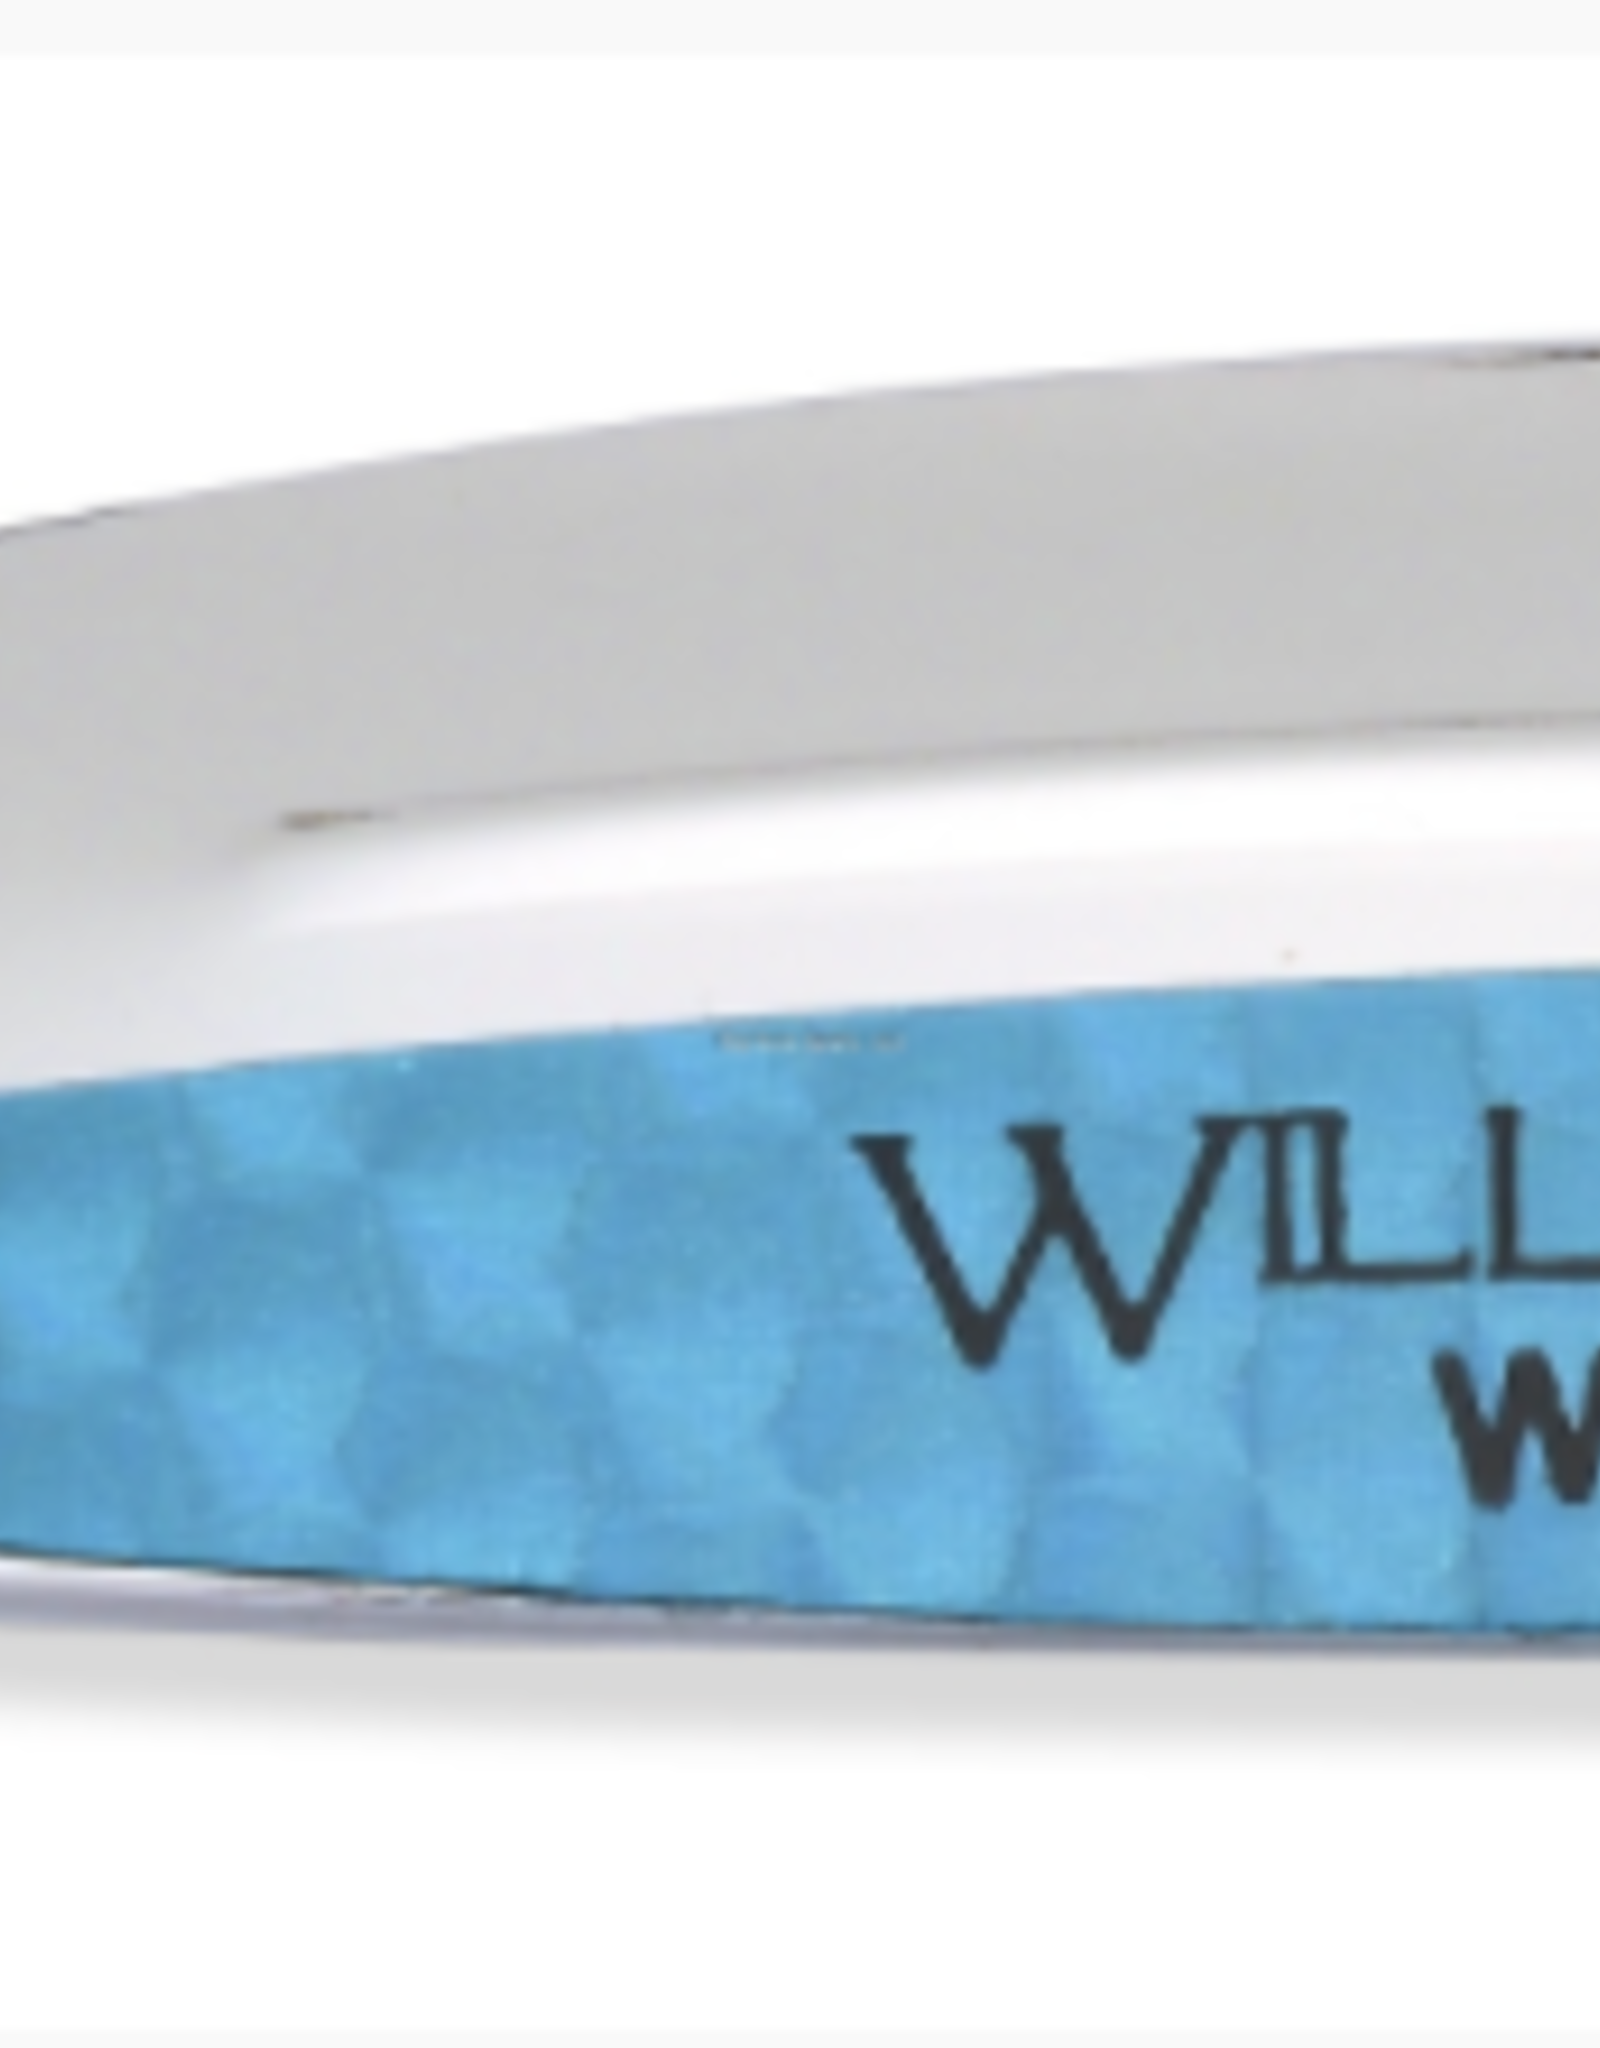 Williams Williams Wabler